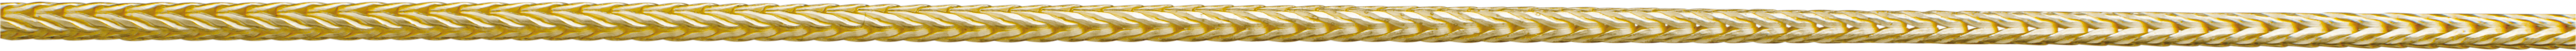 Fox tail chain gold 750/-Gg Ø 1,50mm